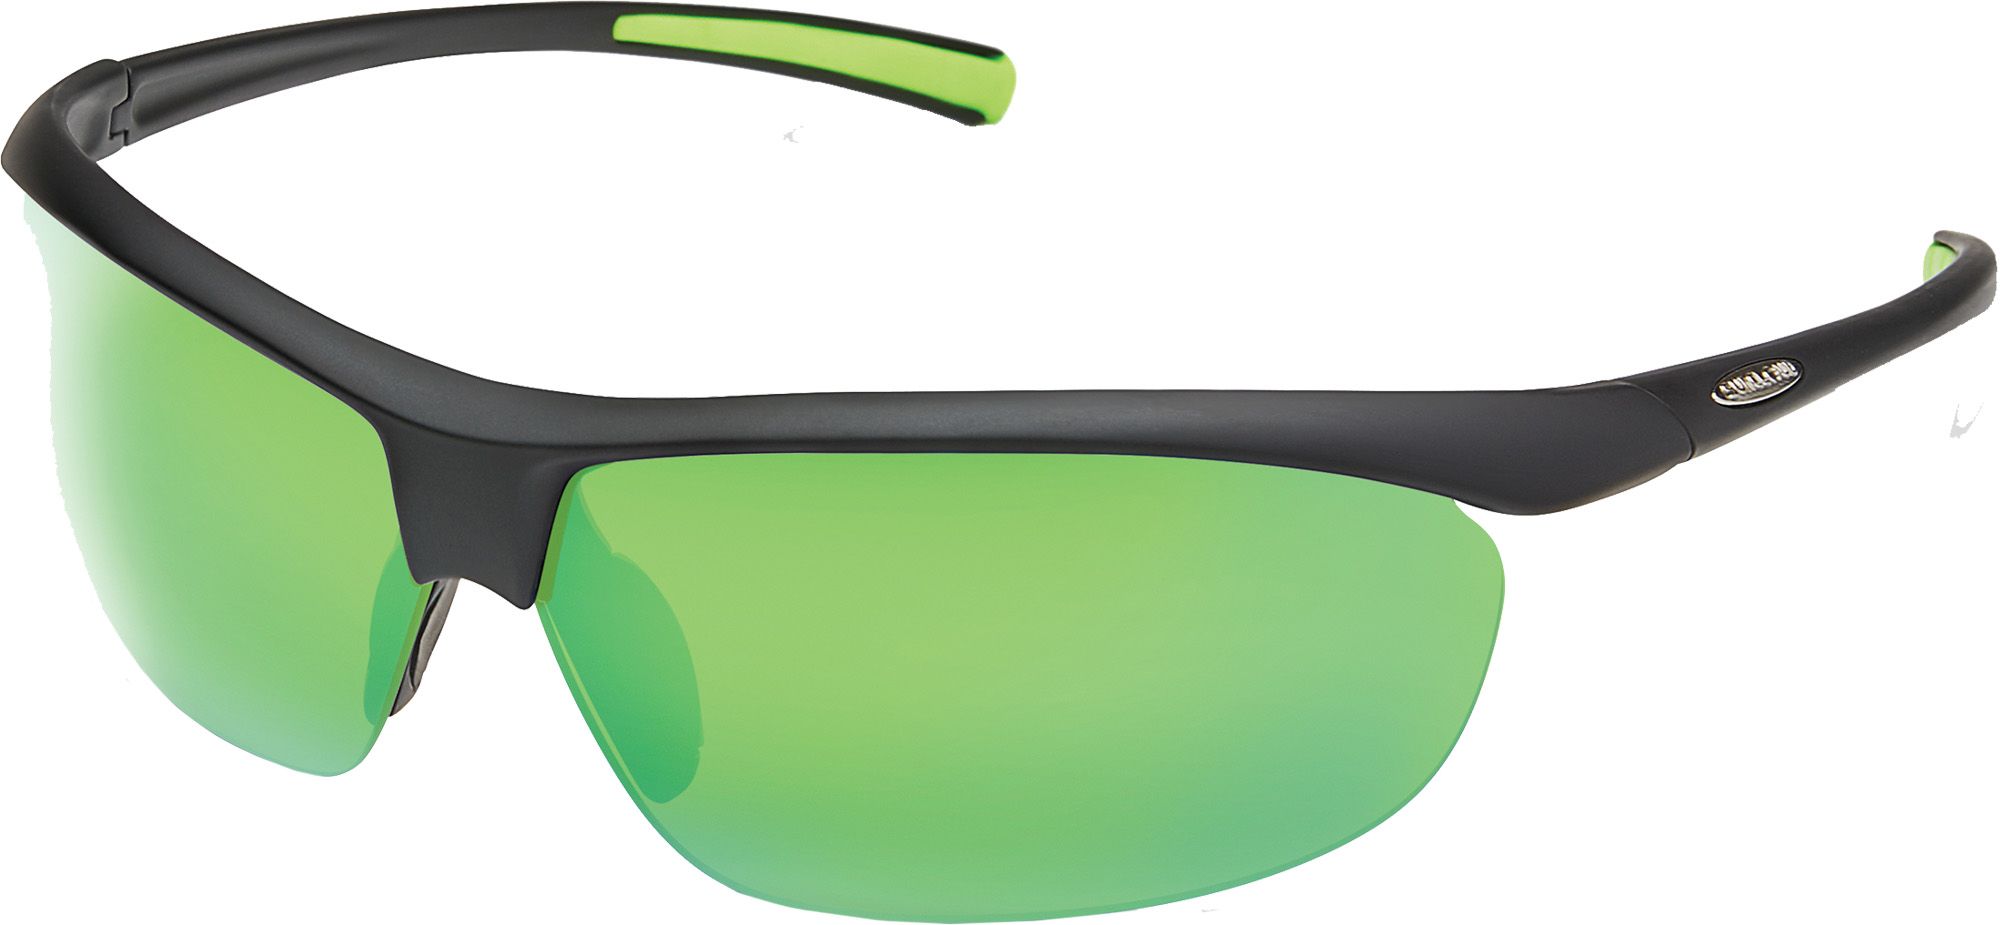 Photos - Sunglasses Suncloud Zephyr Polarized , Men's, Black/Green 20AF9UZPHYRBLKGRN